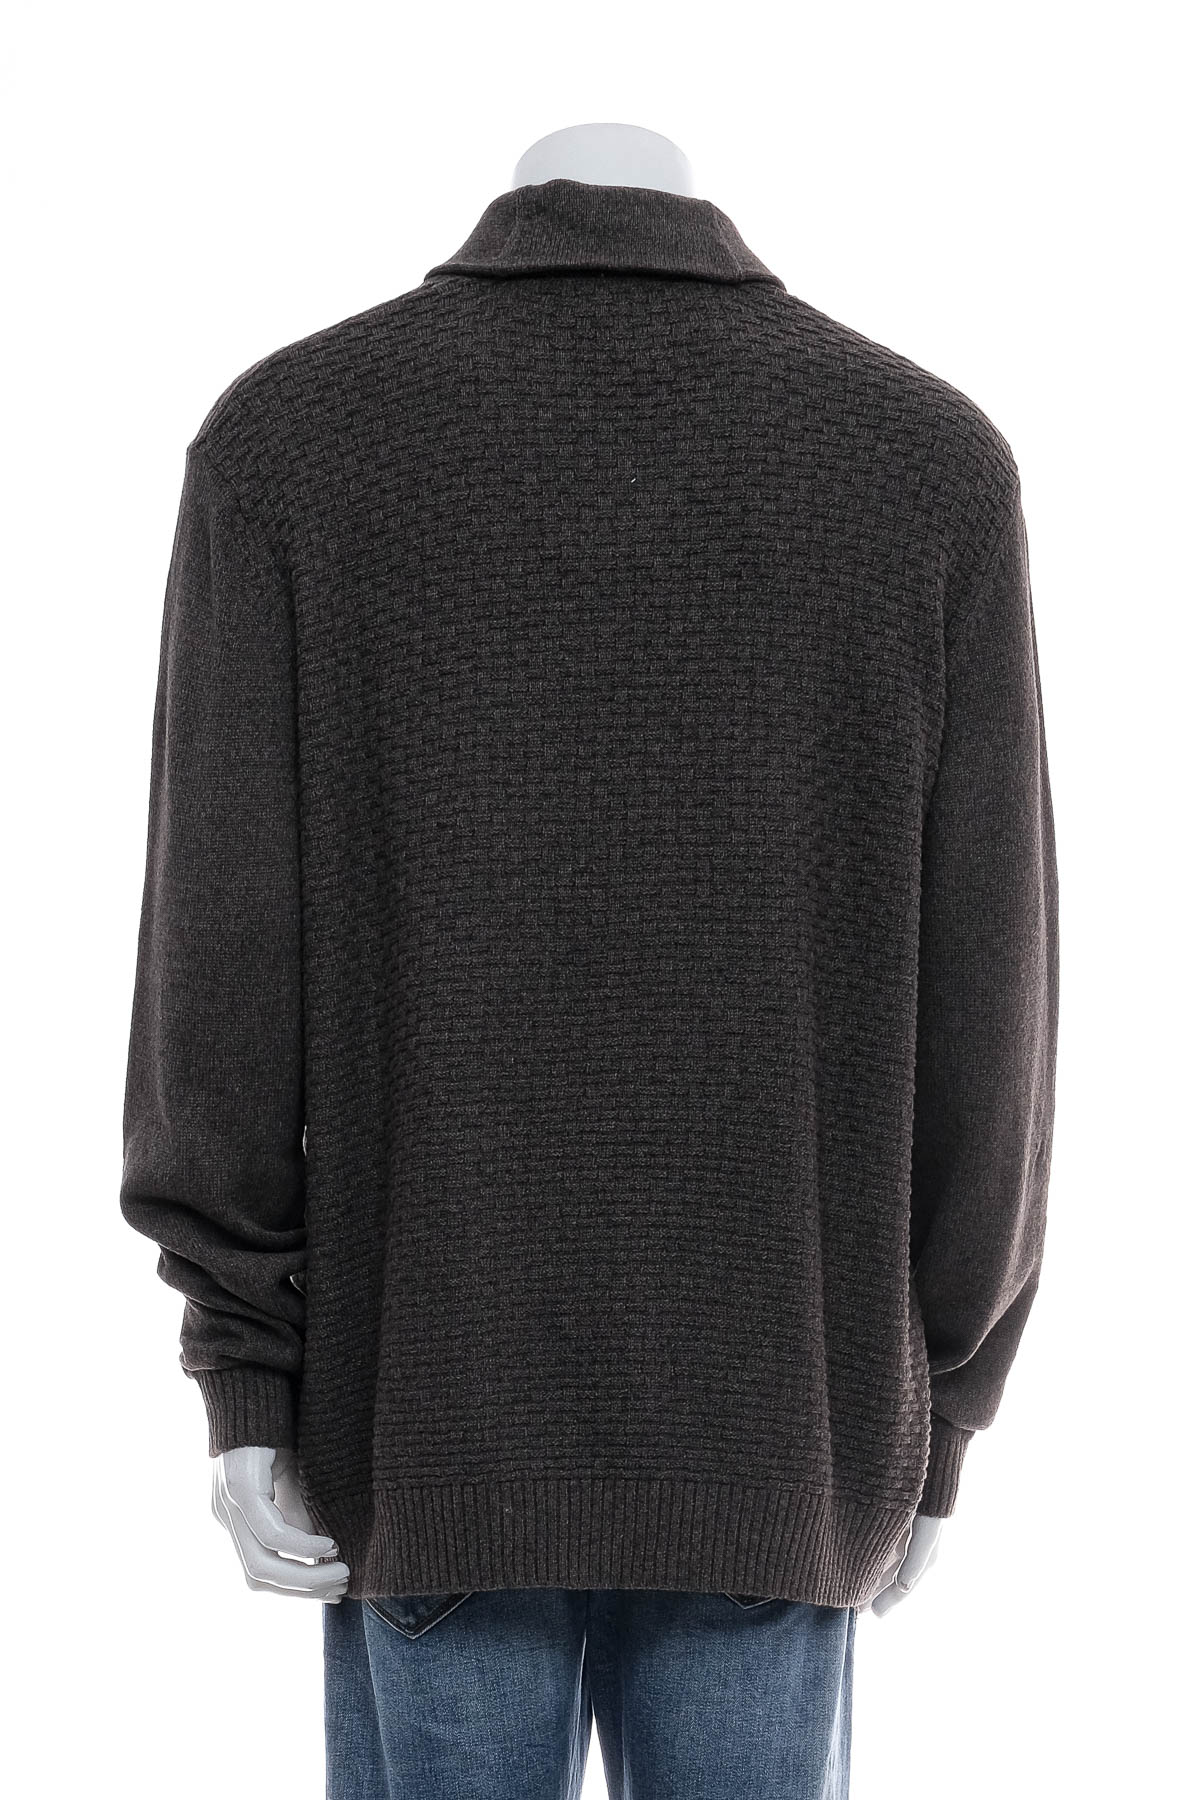 Men's sweater - JOSEPH ABBOUD - 1